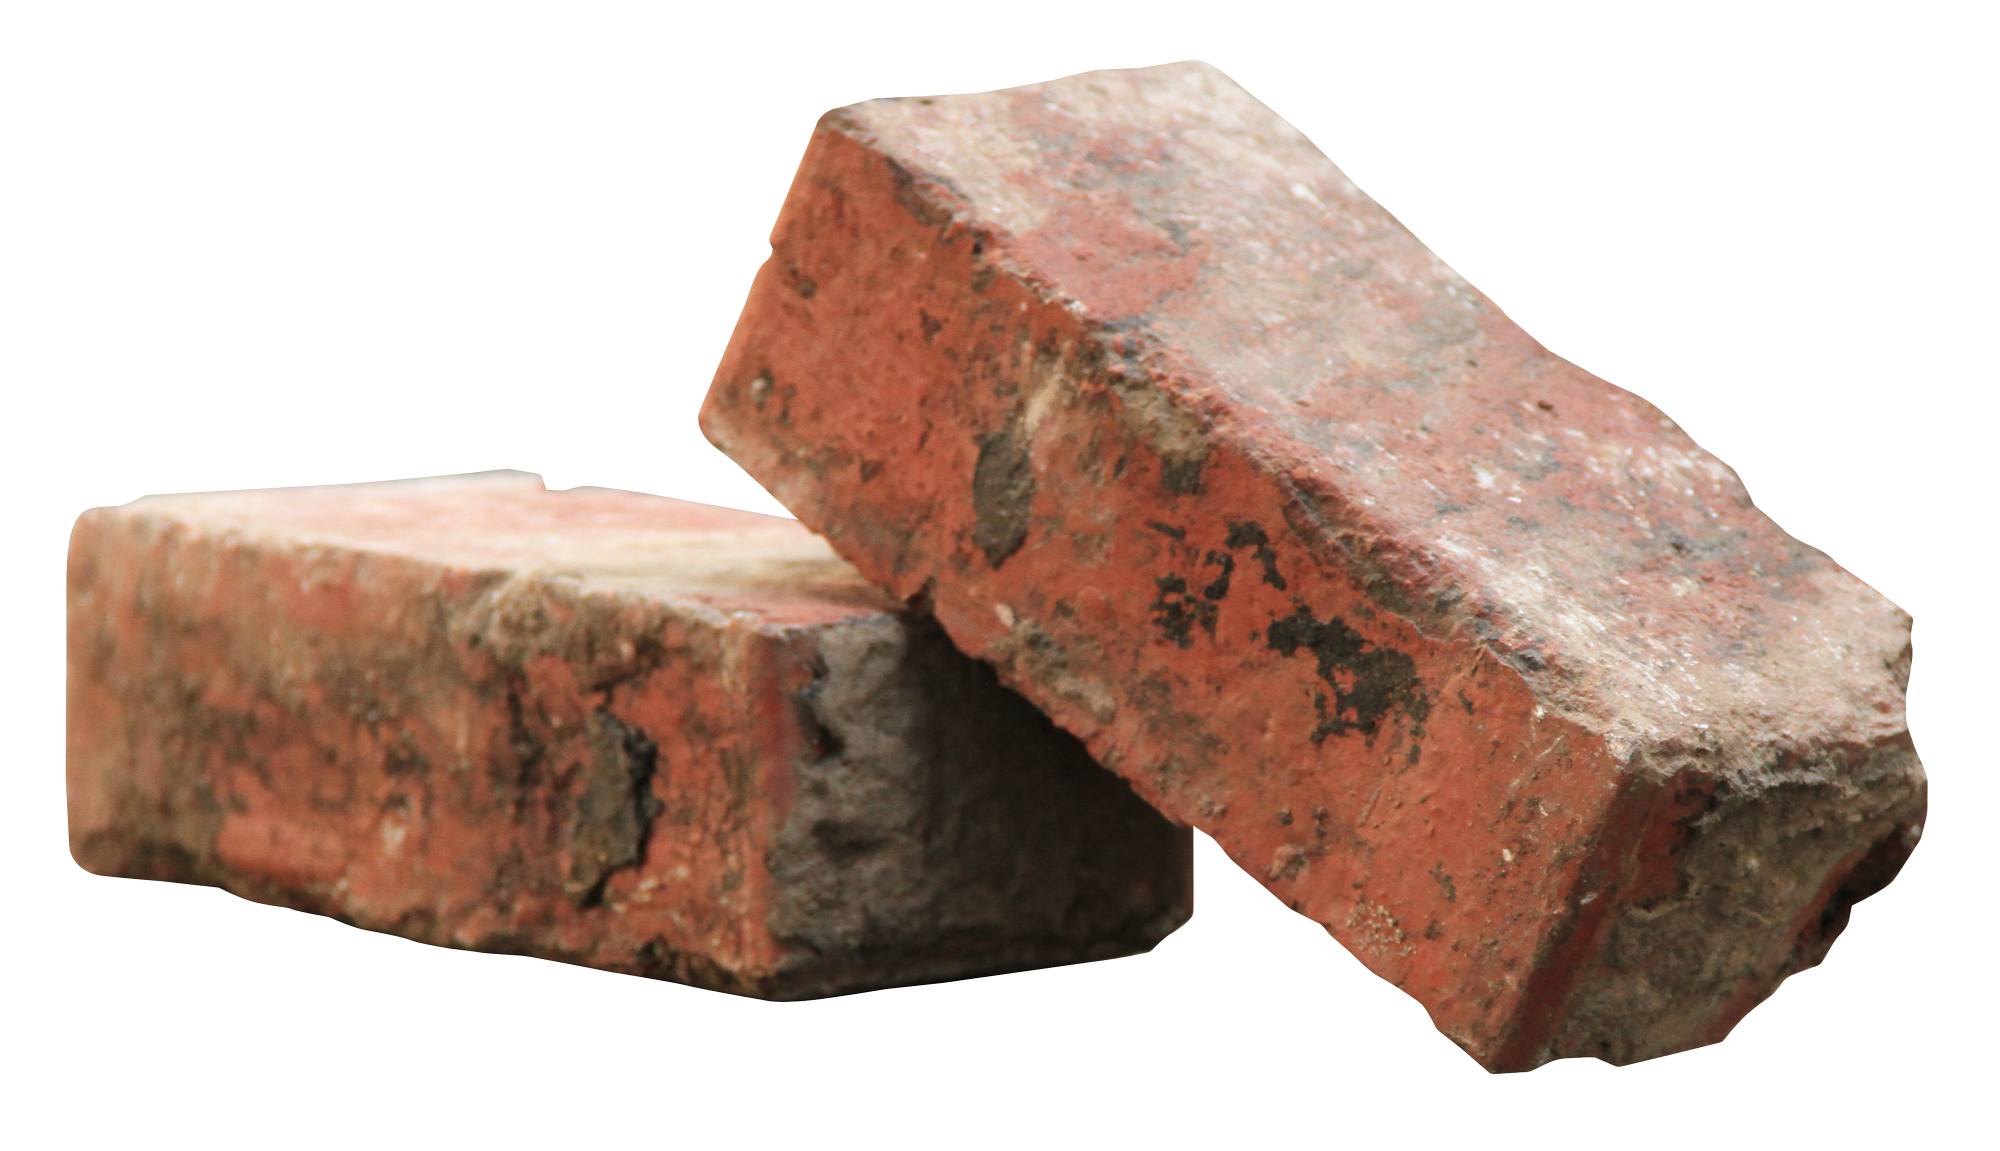 A Close Up Of Bricks